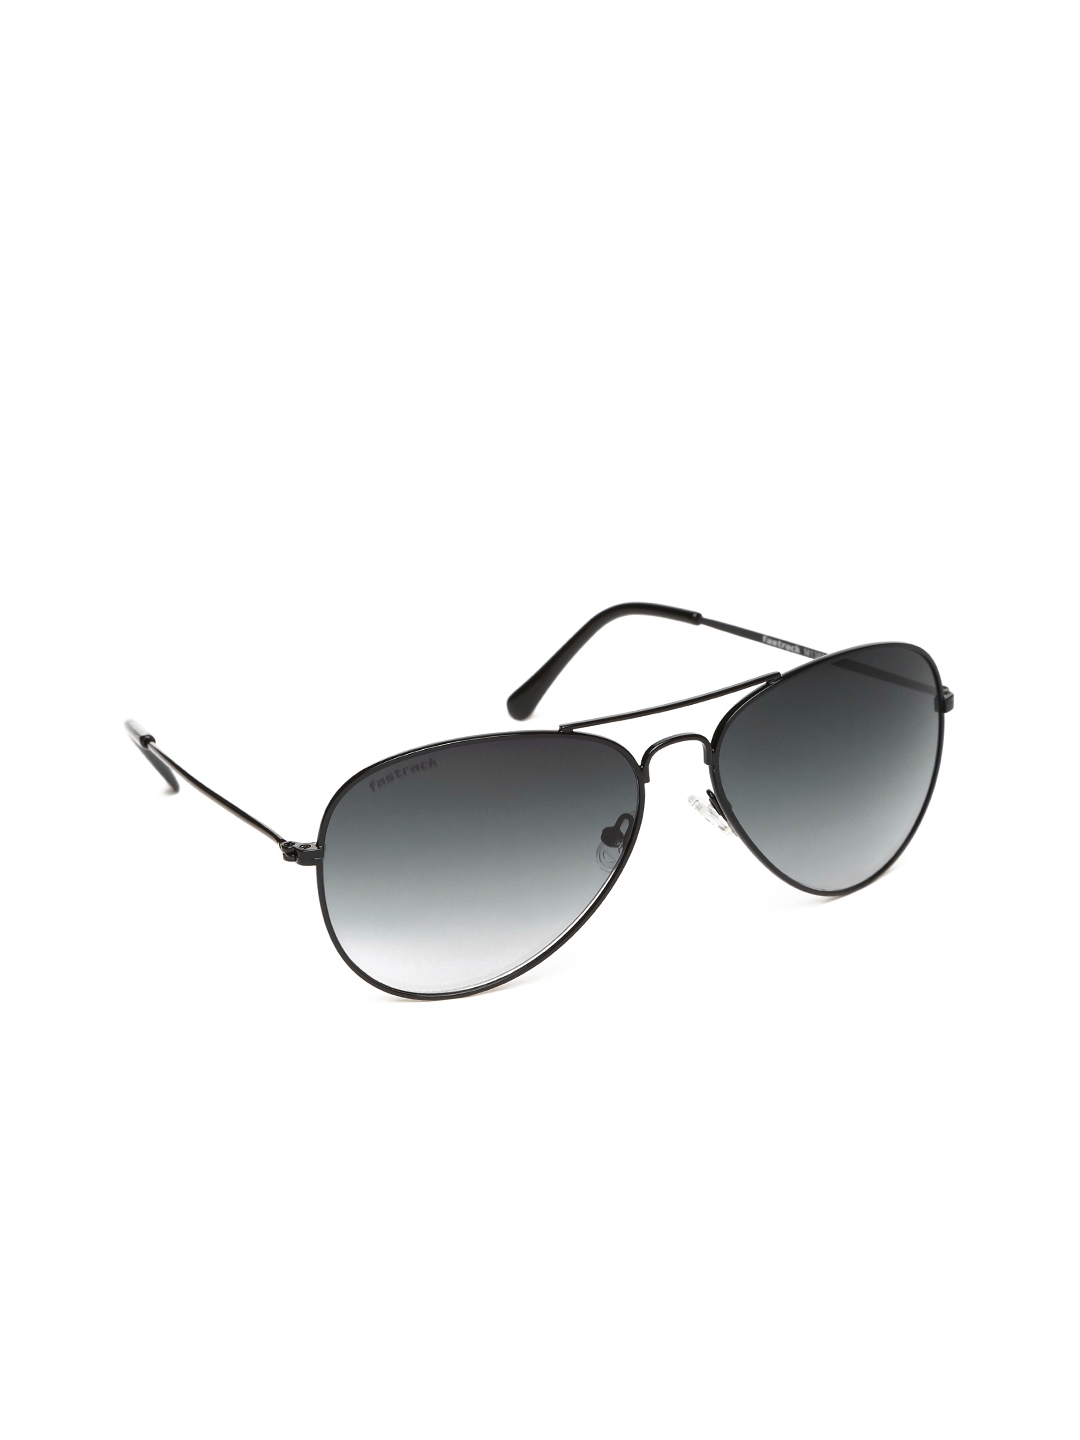 1080px x 1440px - Buy Fastrack Men Gradient Sunglasses M138BK1 - Sunglasses for Men 734265 |  Myntra